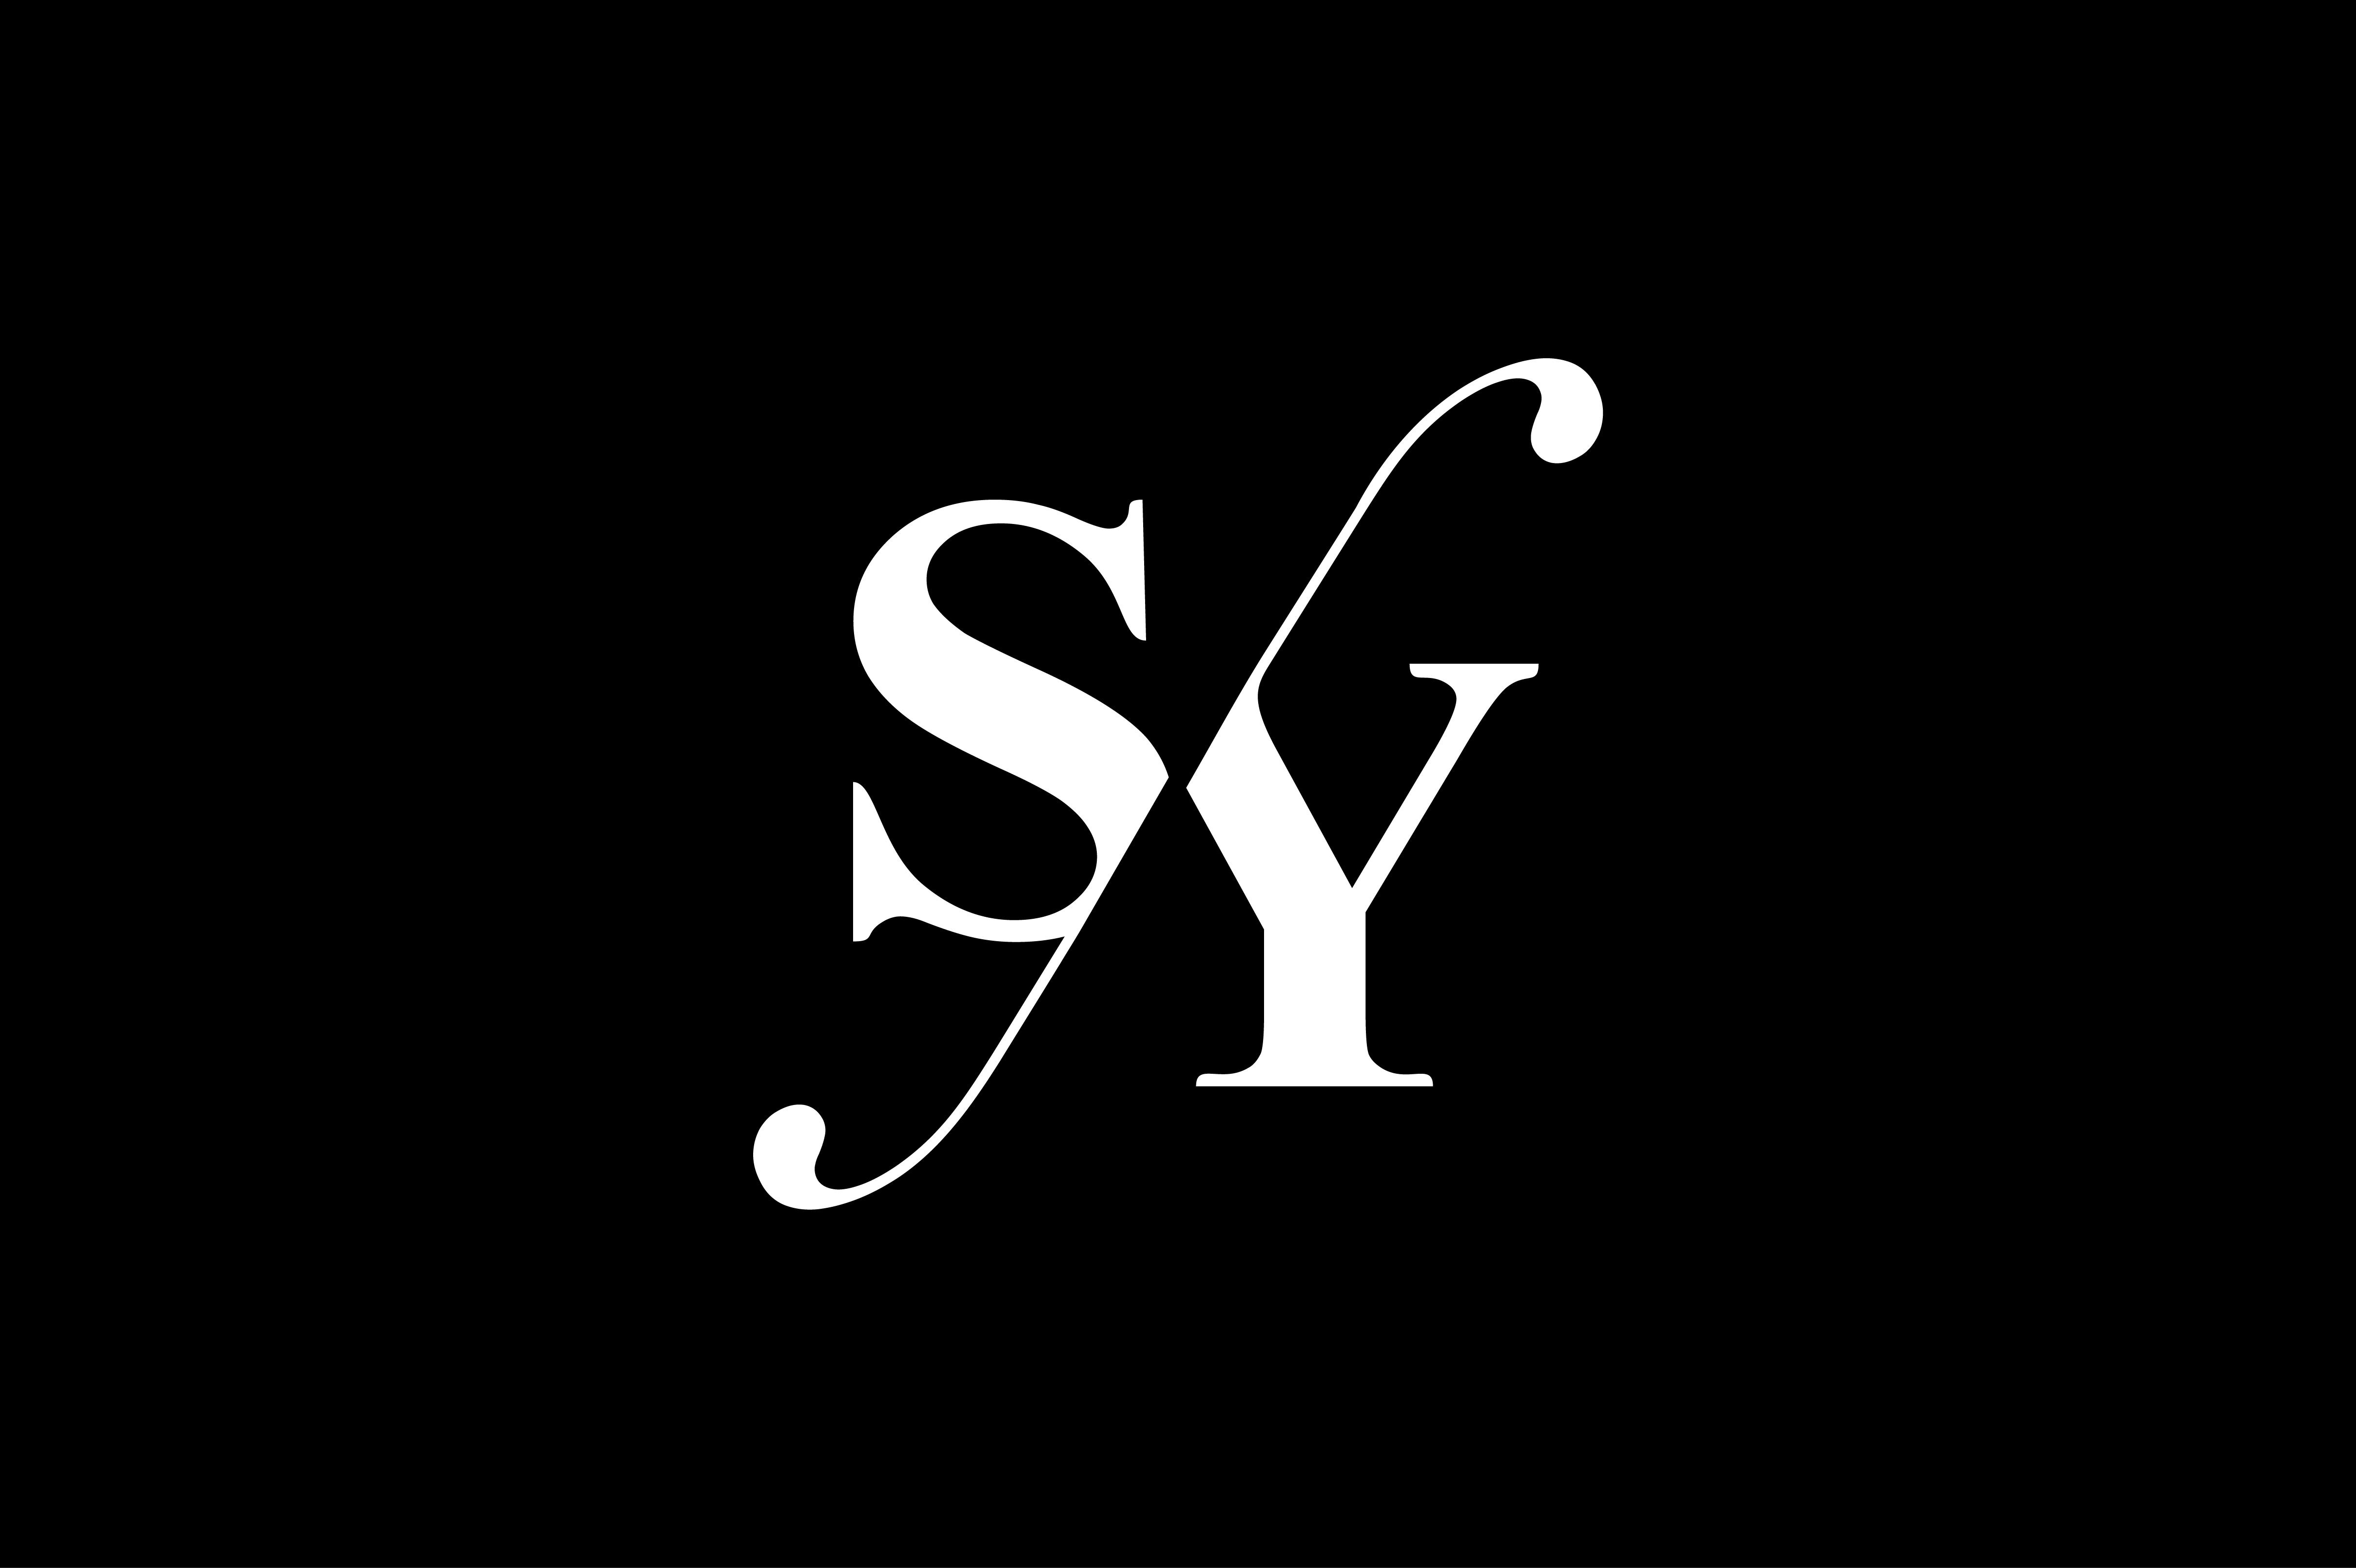 sy-monogram-logo-design-by-vectorseller-thehungryjpeg